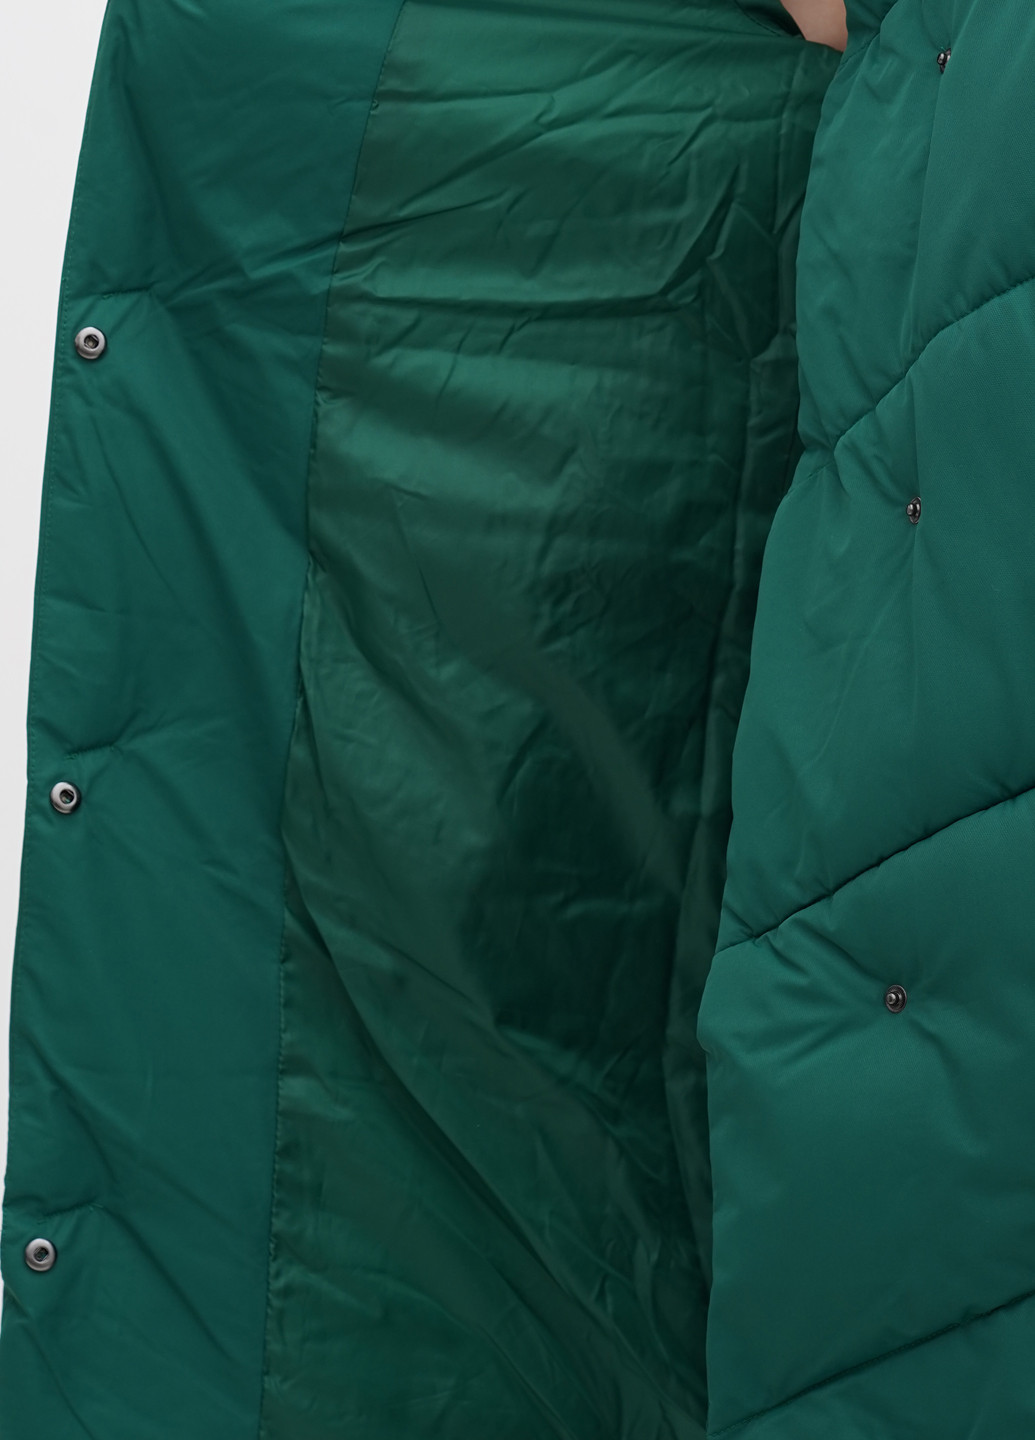 Зелена зимня куртка Reserved